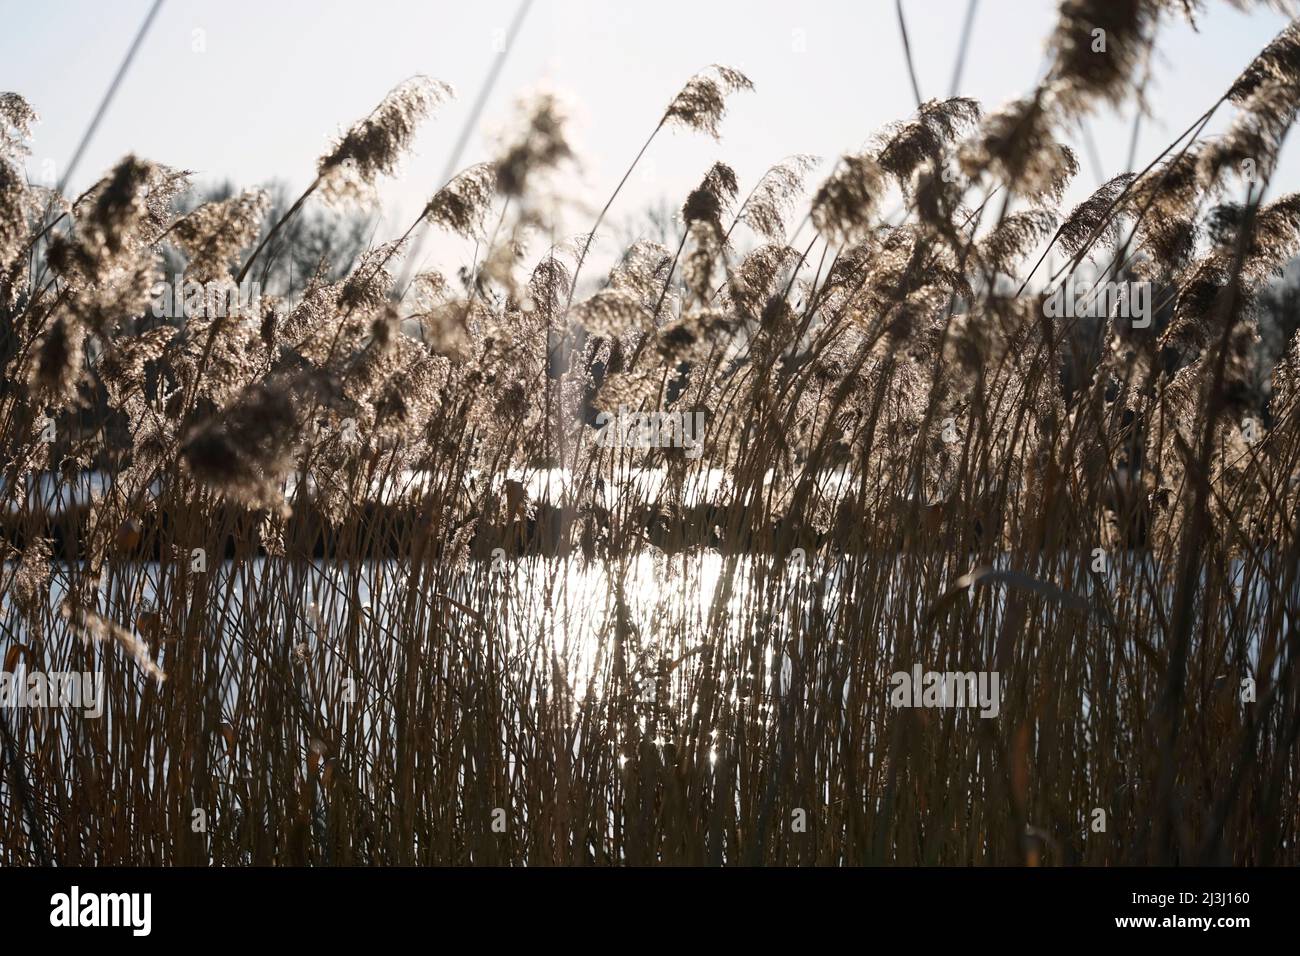 Germany, Bavaria, Upper Bavaria, Altötting district, Neuötting, Inn floodplain, wetland, river, oxbow lake, reeds Stock Photo